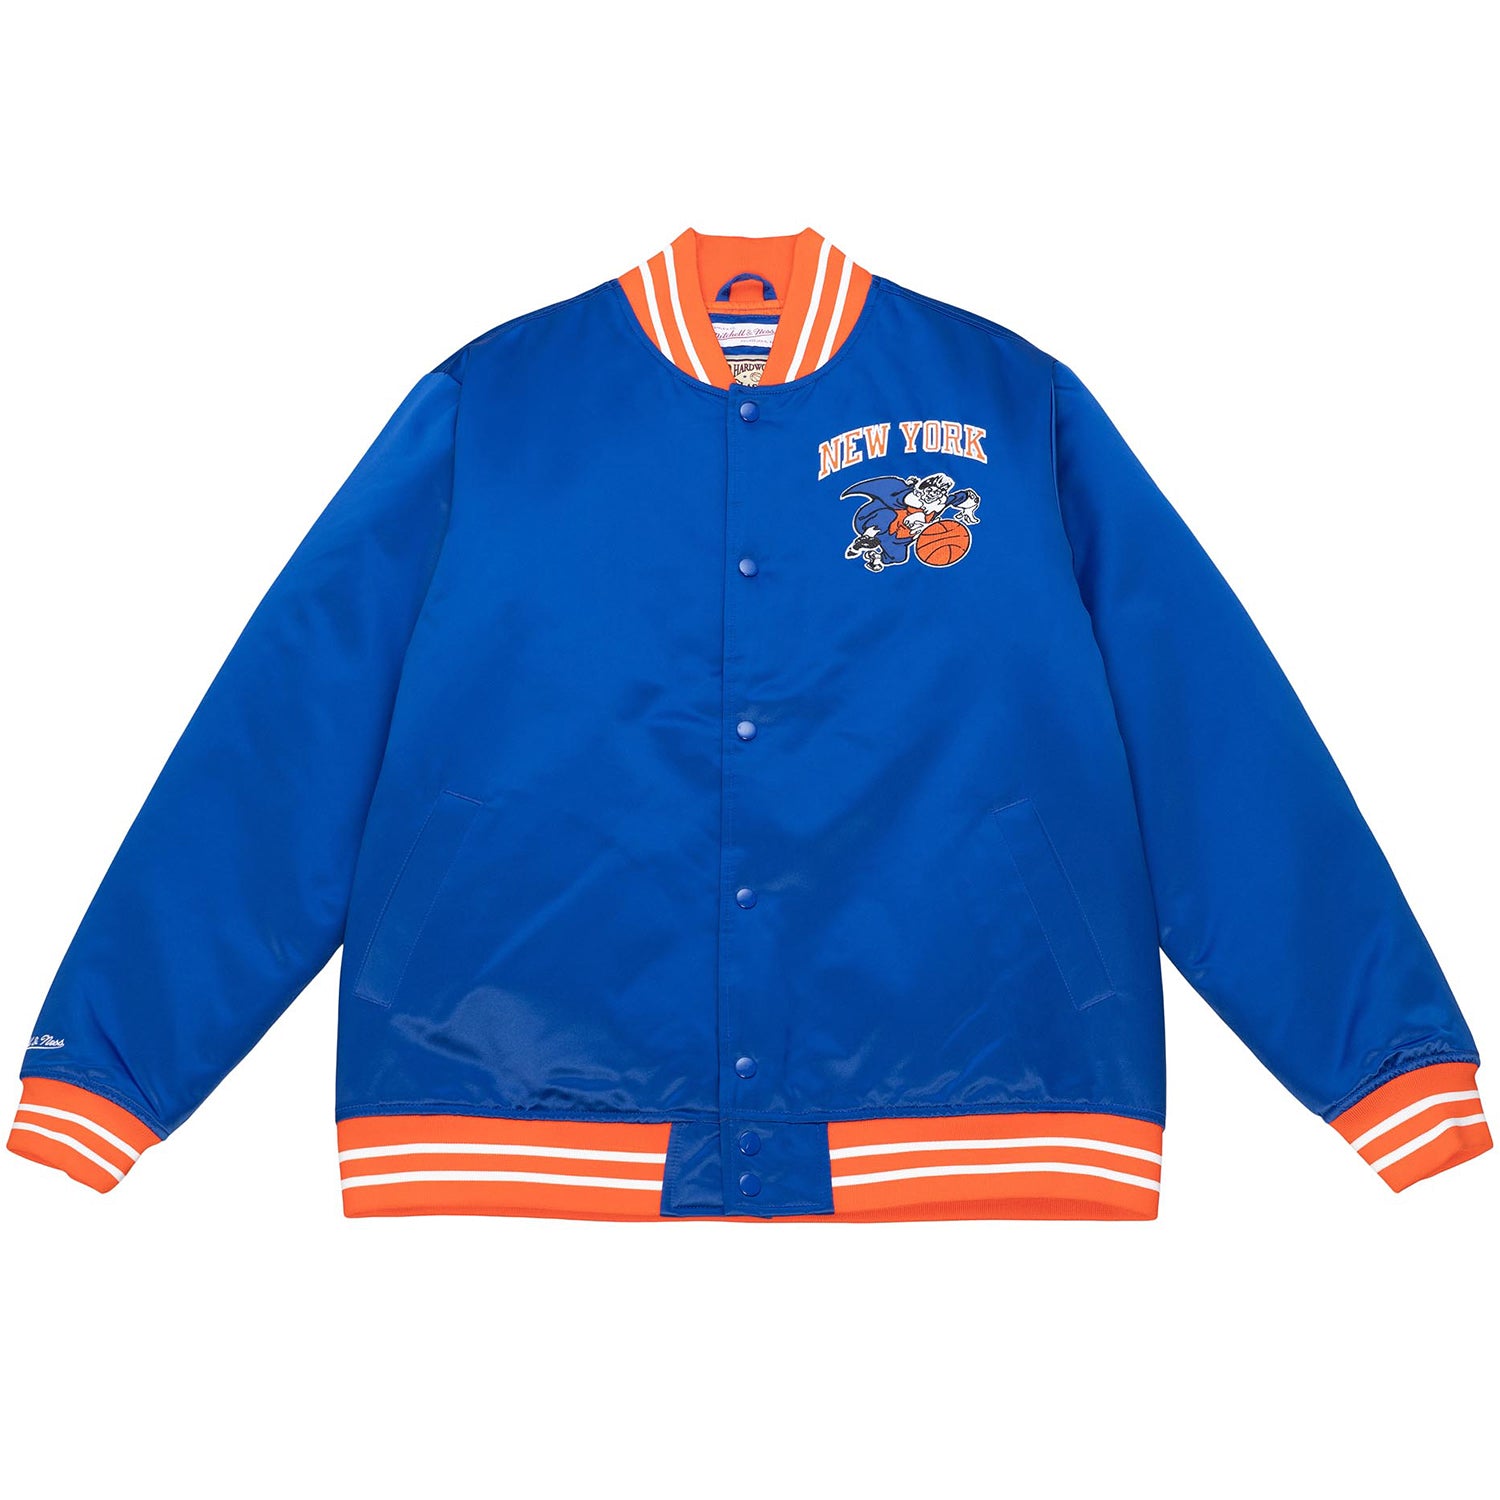 Mitchell & Ness Knicks Heavyweight Satin Jacket In Blue, Orange & White - Front View